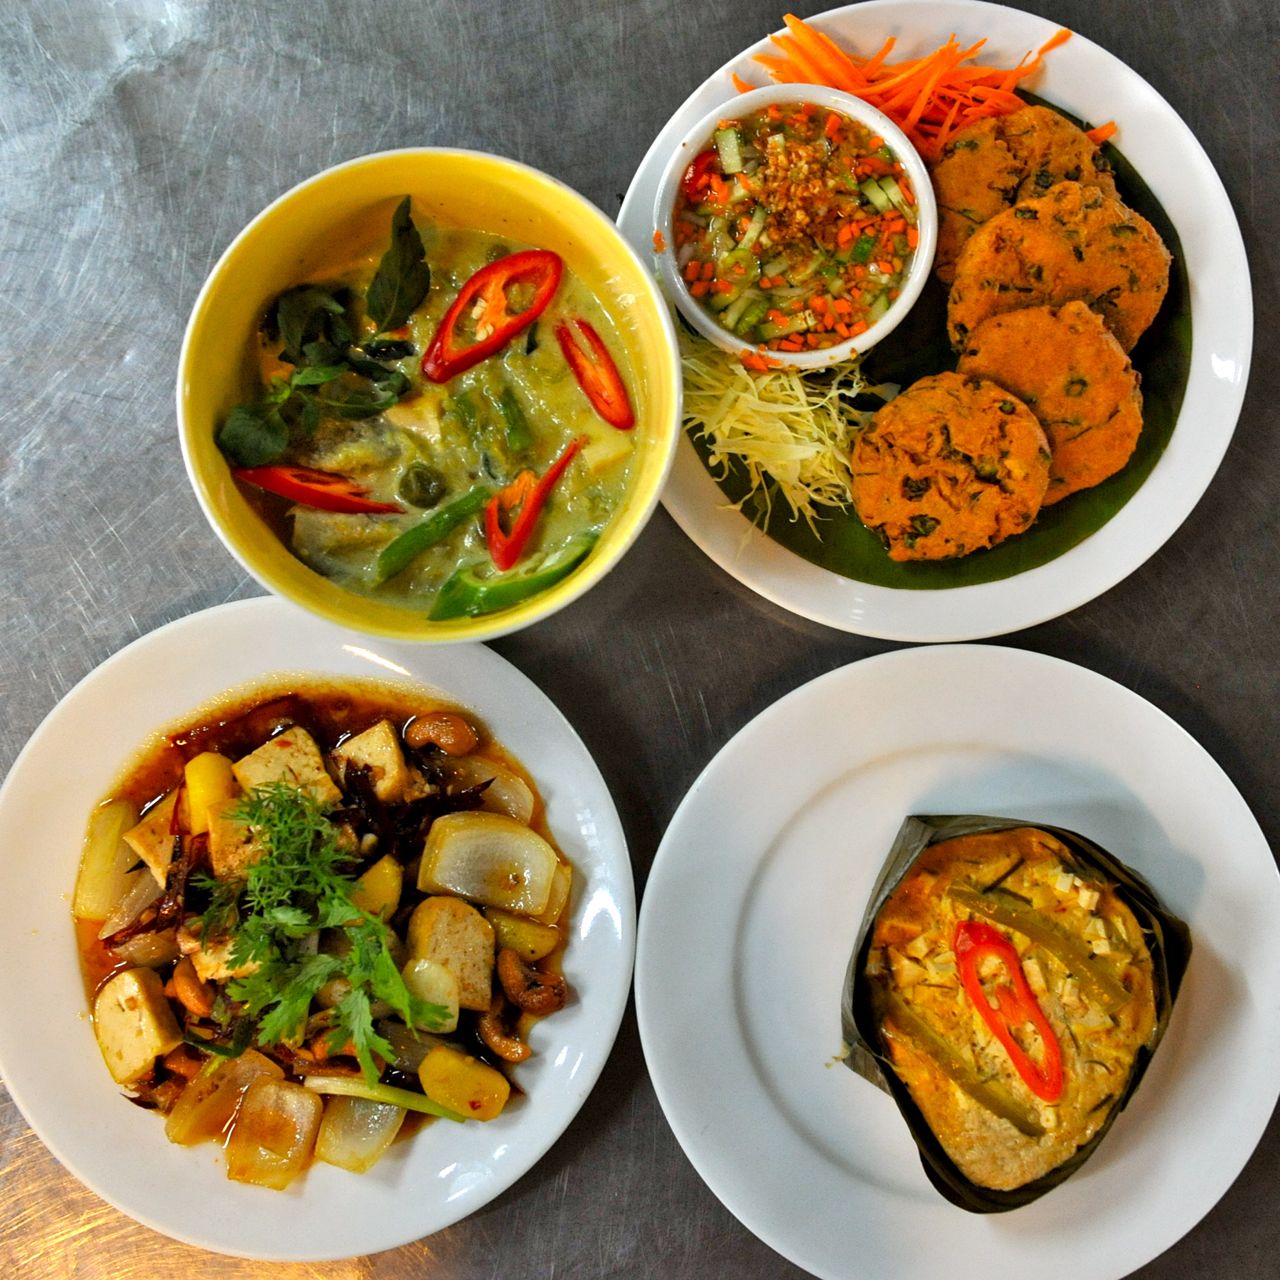 Thai cooking